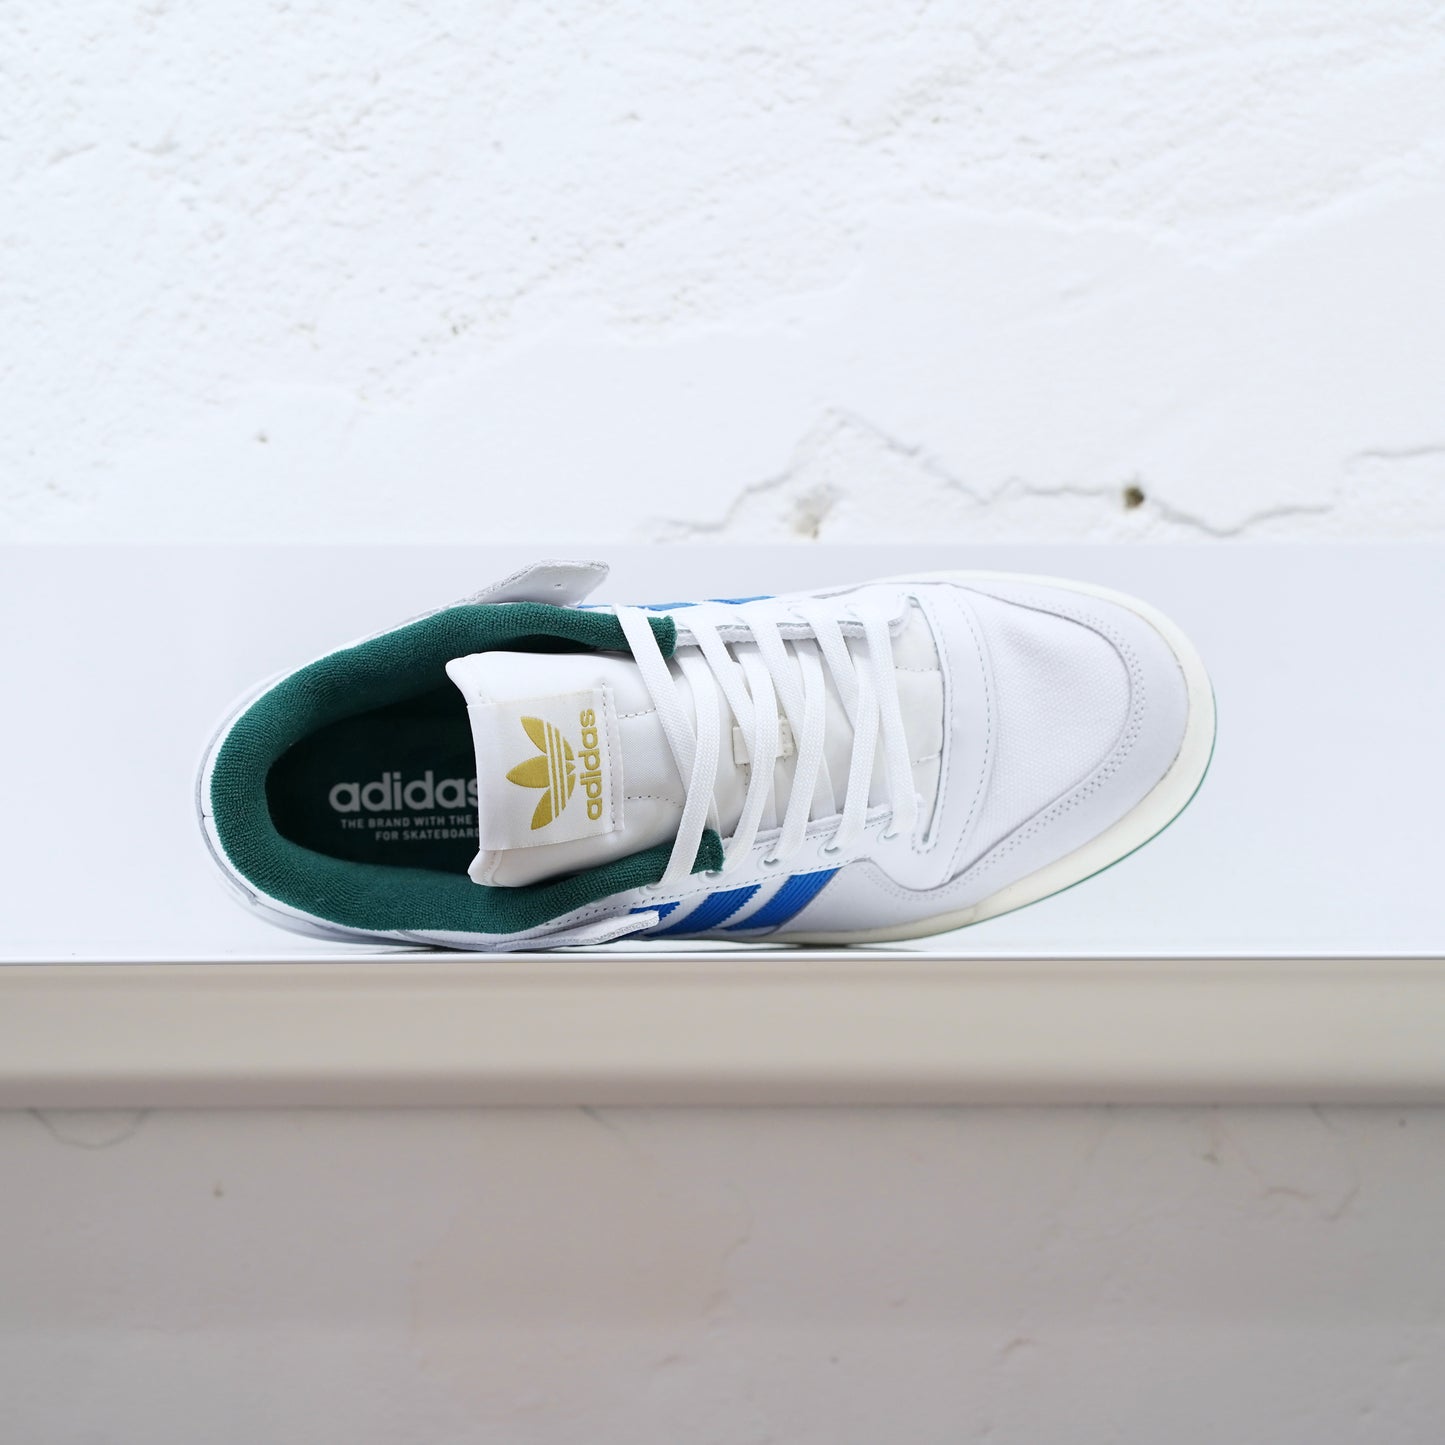 ADIDAS - Forum 84 Low ADV Shoes - White/Blue/Green